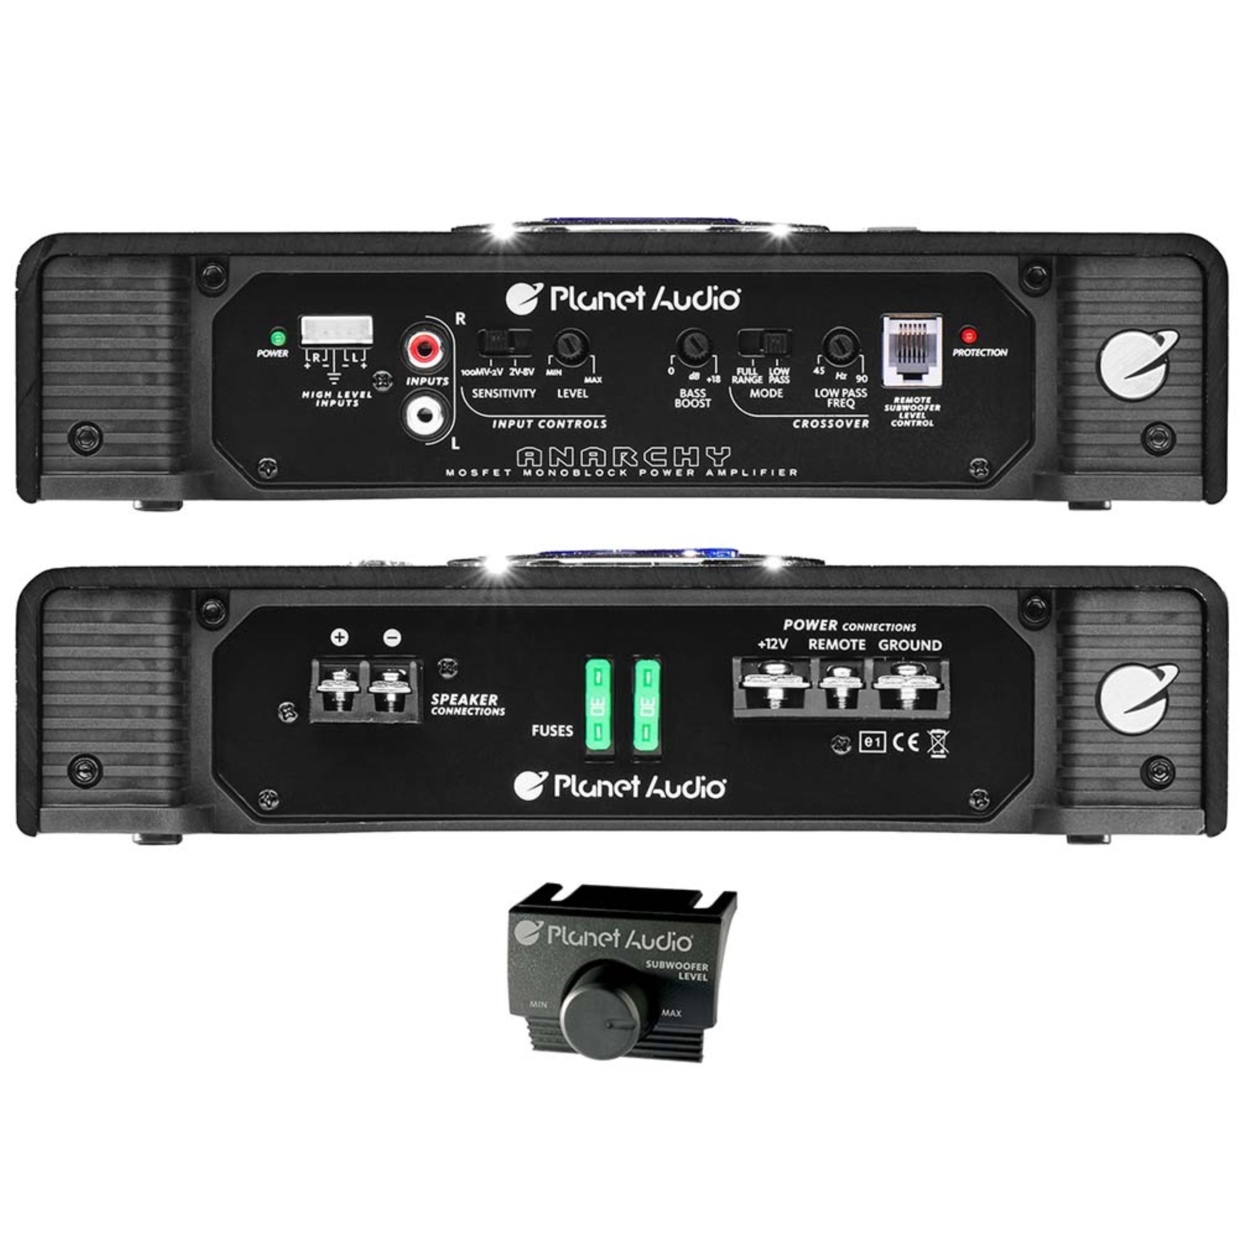 Planet Audio AC2500.1M 2500 Watt Monoblock Car Amplifier, Mosfet Power Supply